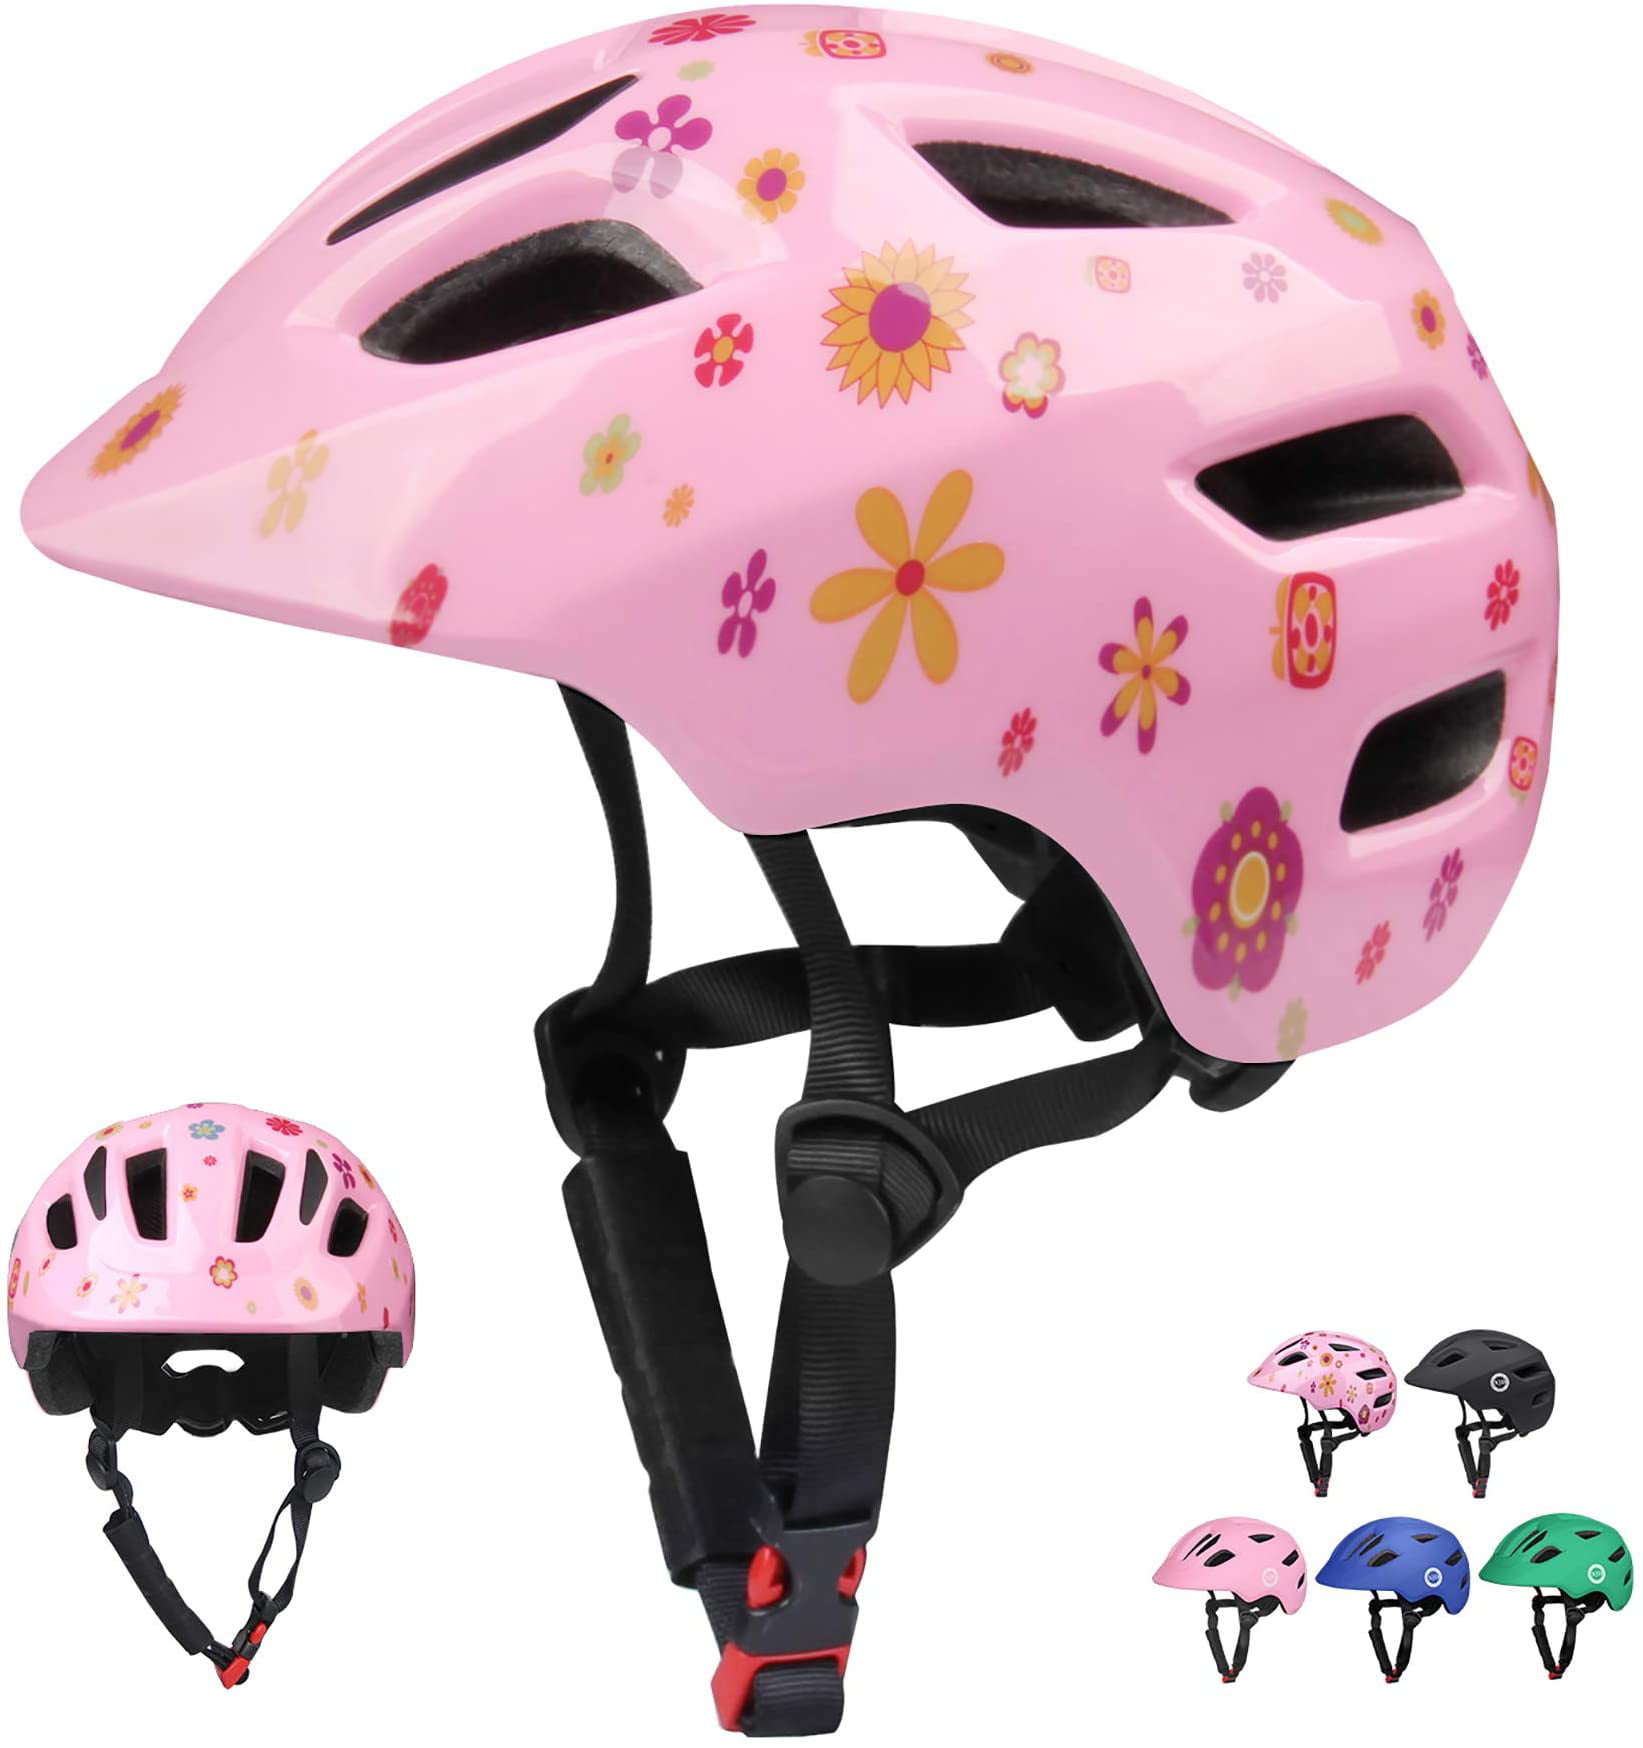 Kids Boys Girls Safety Helmet Bike Bicycle Skate Board Scooter Sport Adjustable 